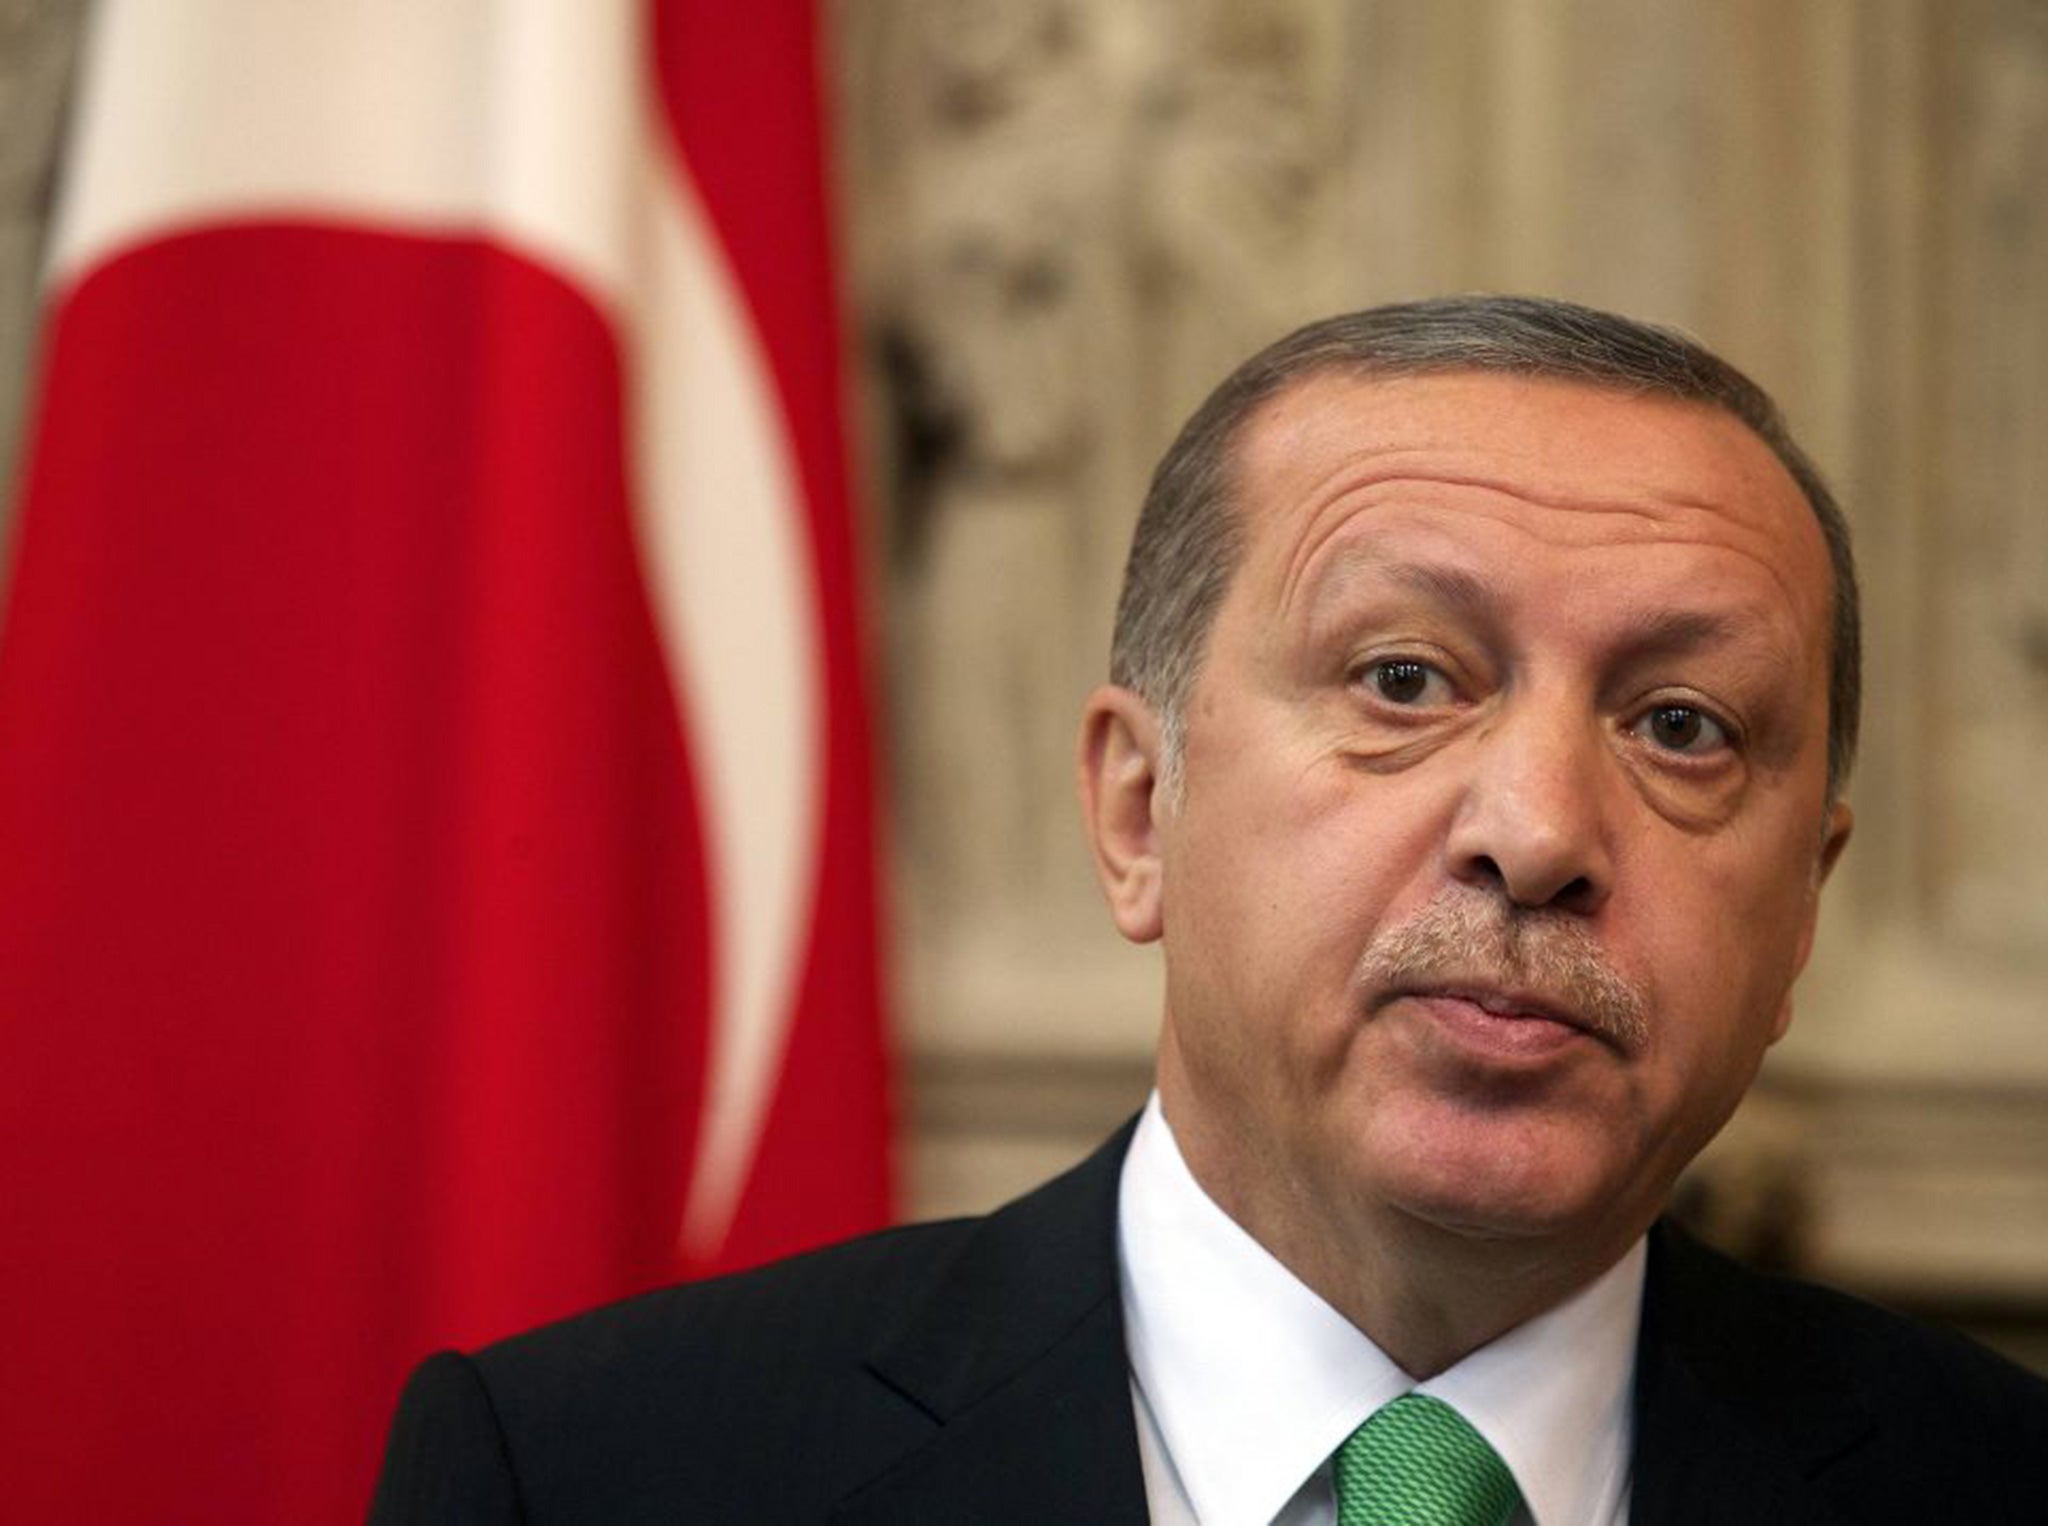 Recep Tayyip Erdogan made the remark after returning from Saudi Arabia